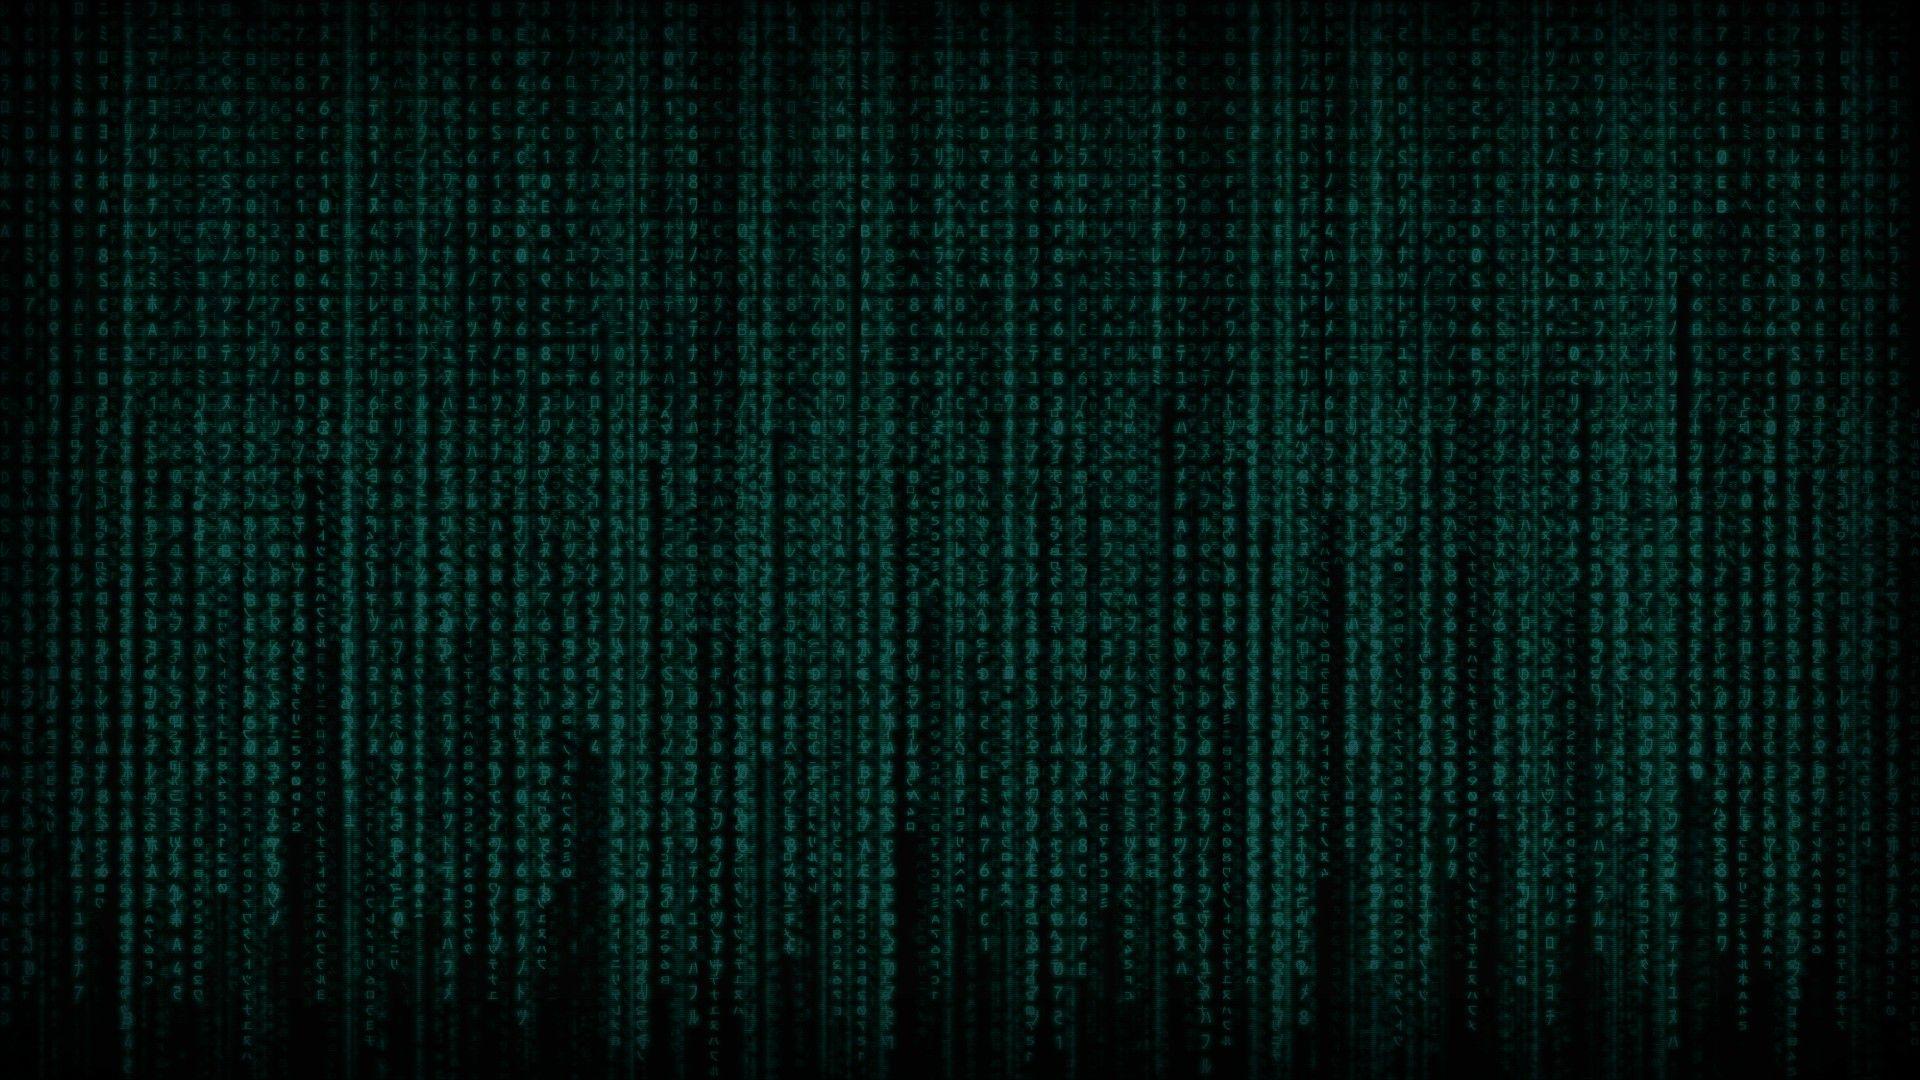 Green matrix code wallpaper. PC